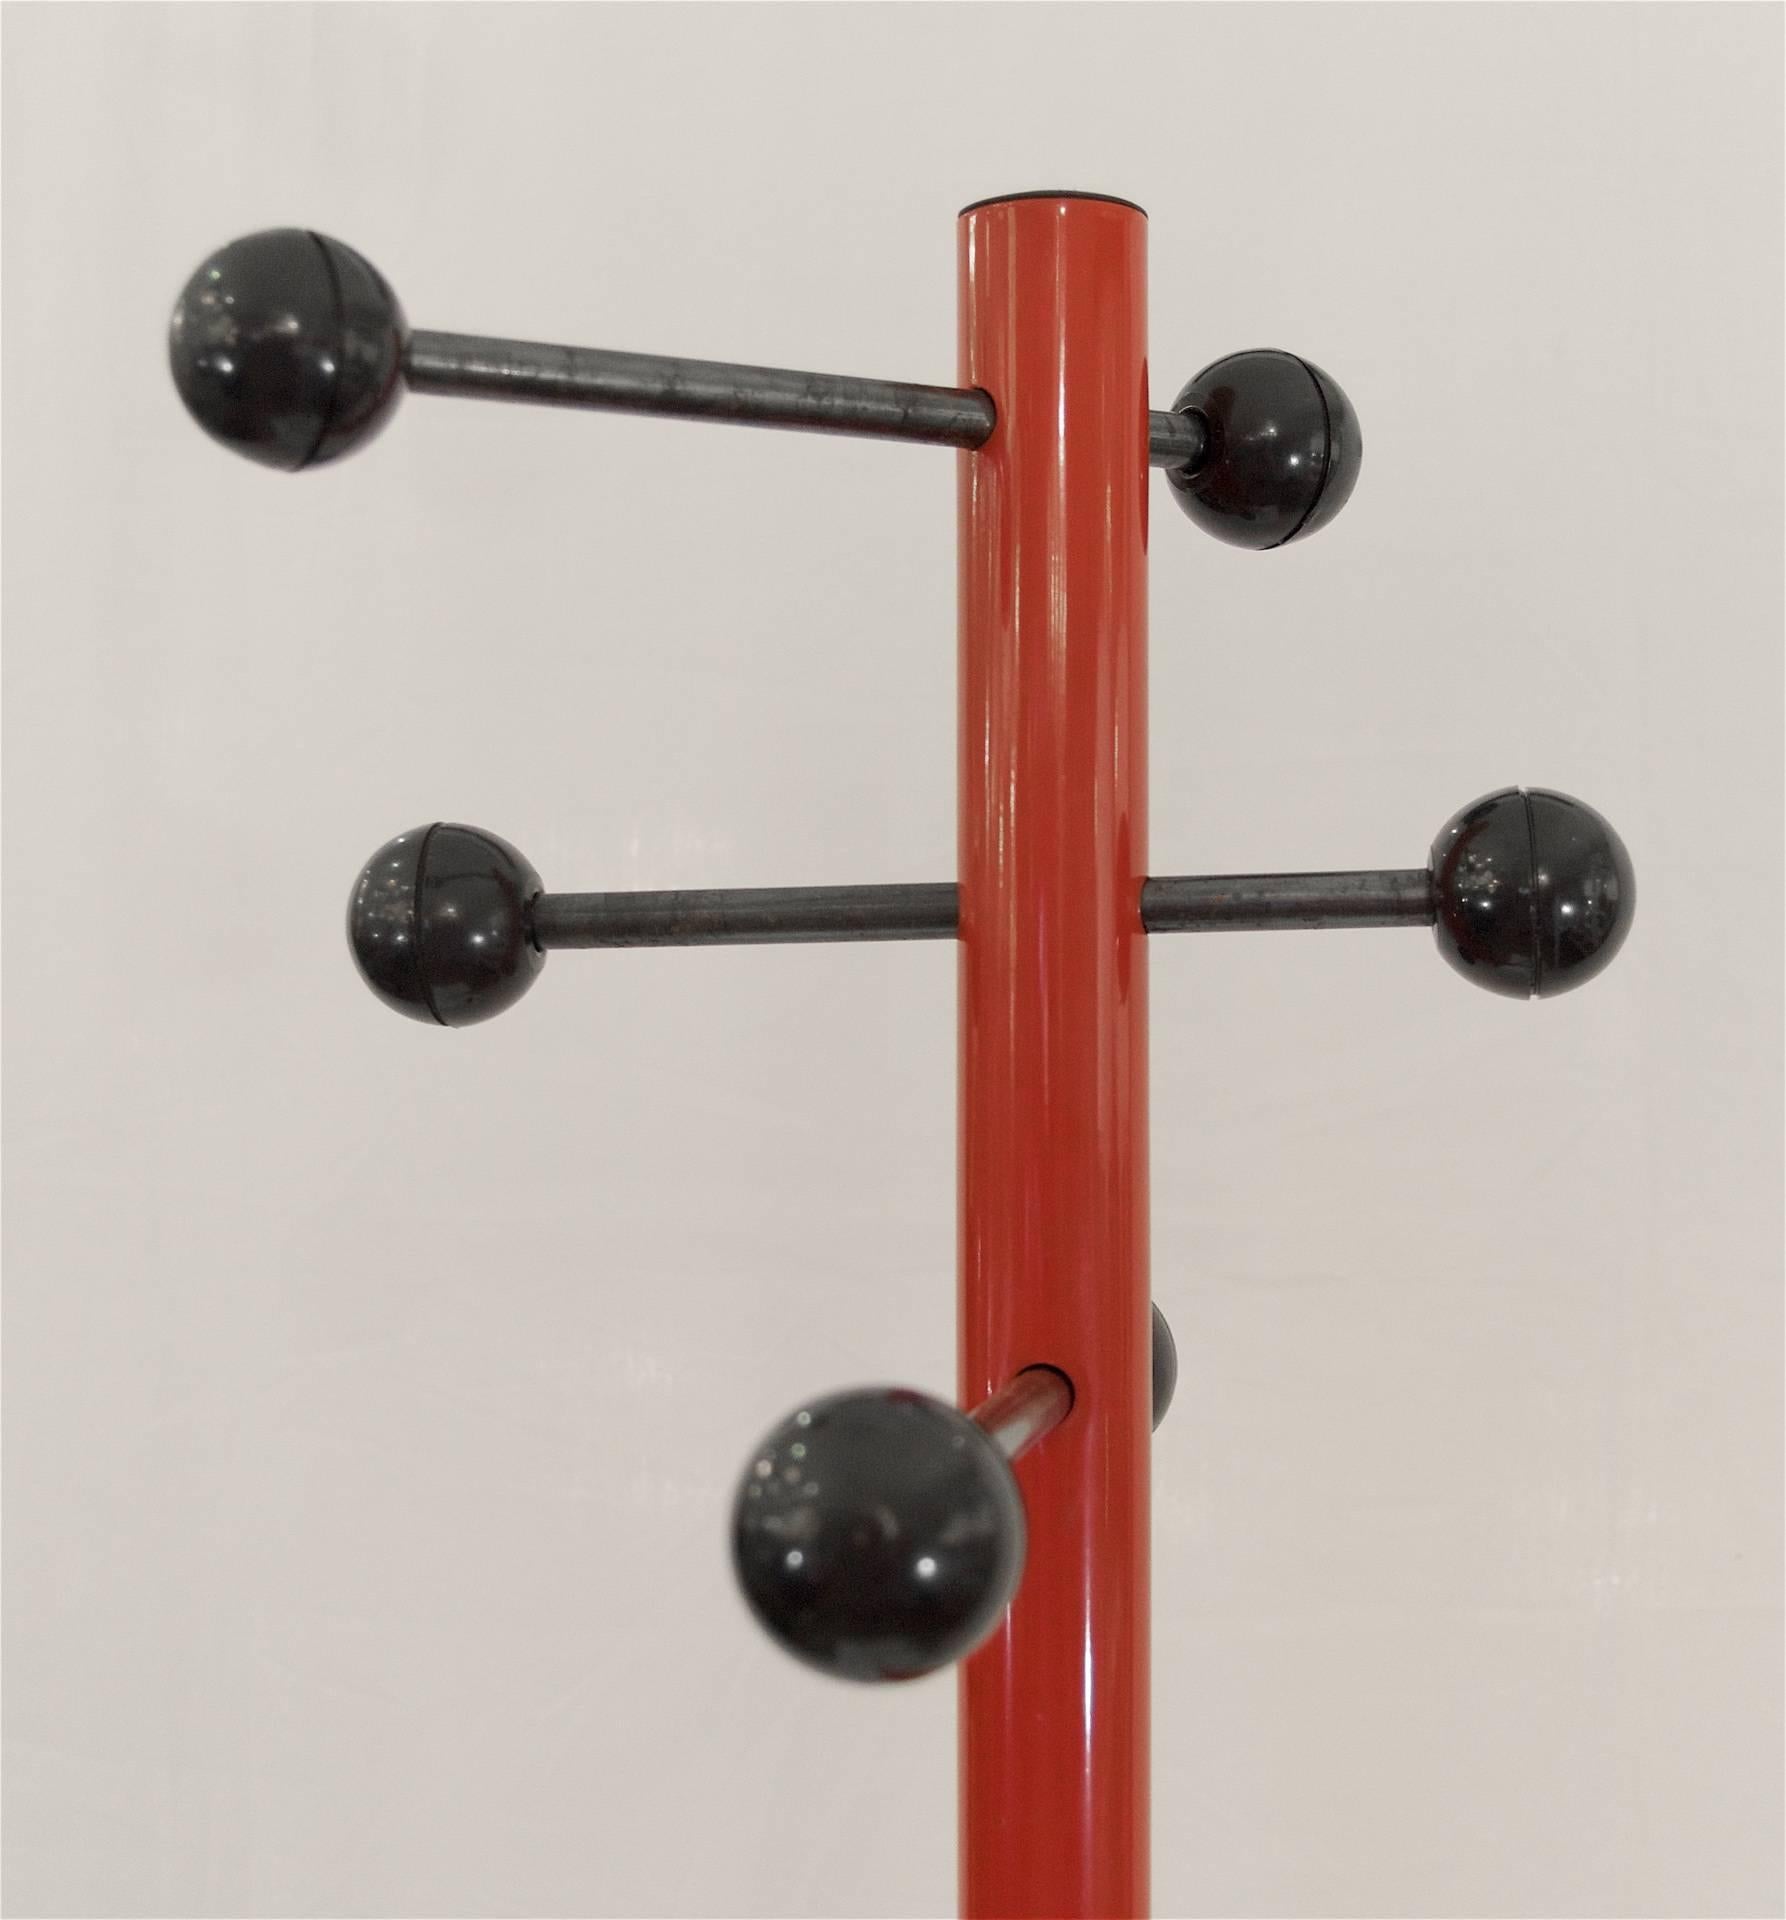 Enameled Red Enamel Italian Coat Rack with Adjustable Arms